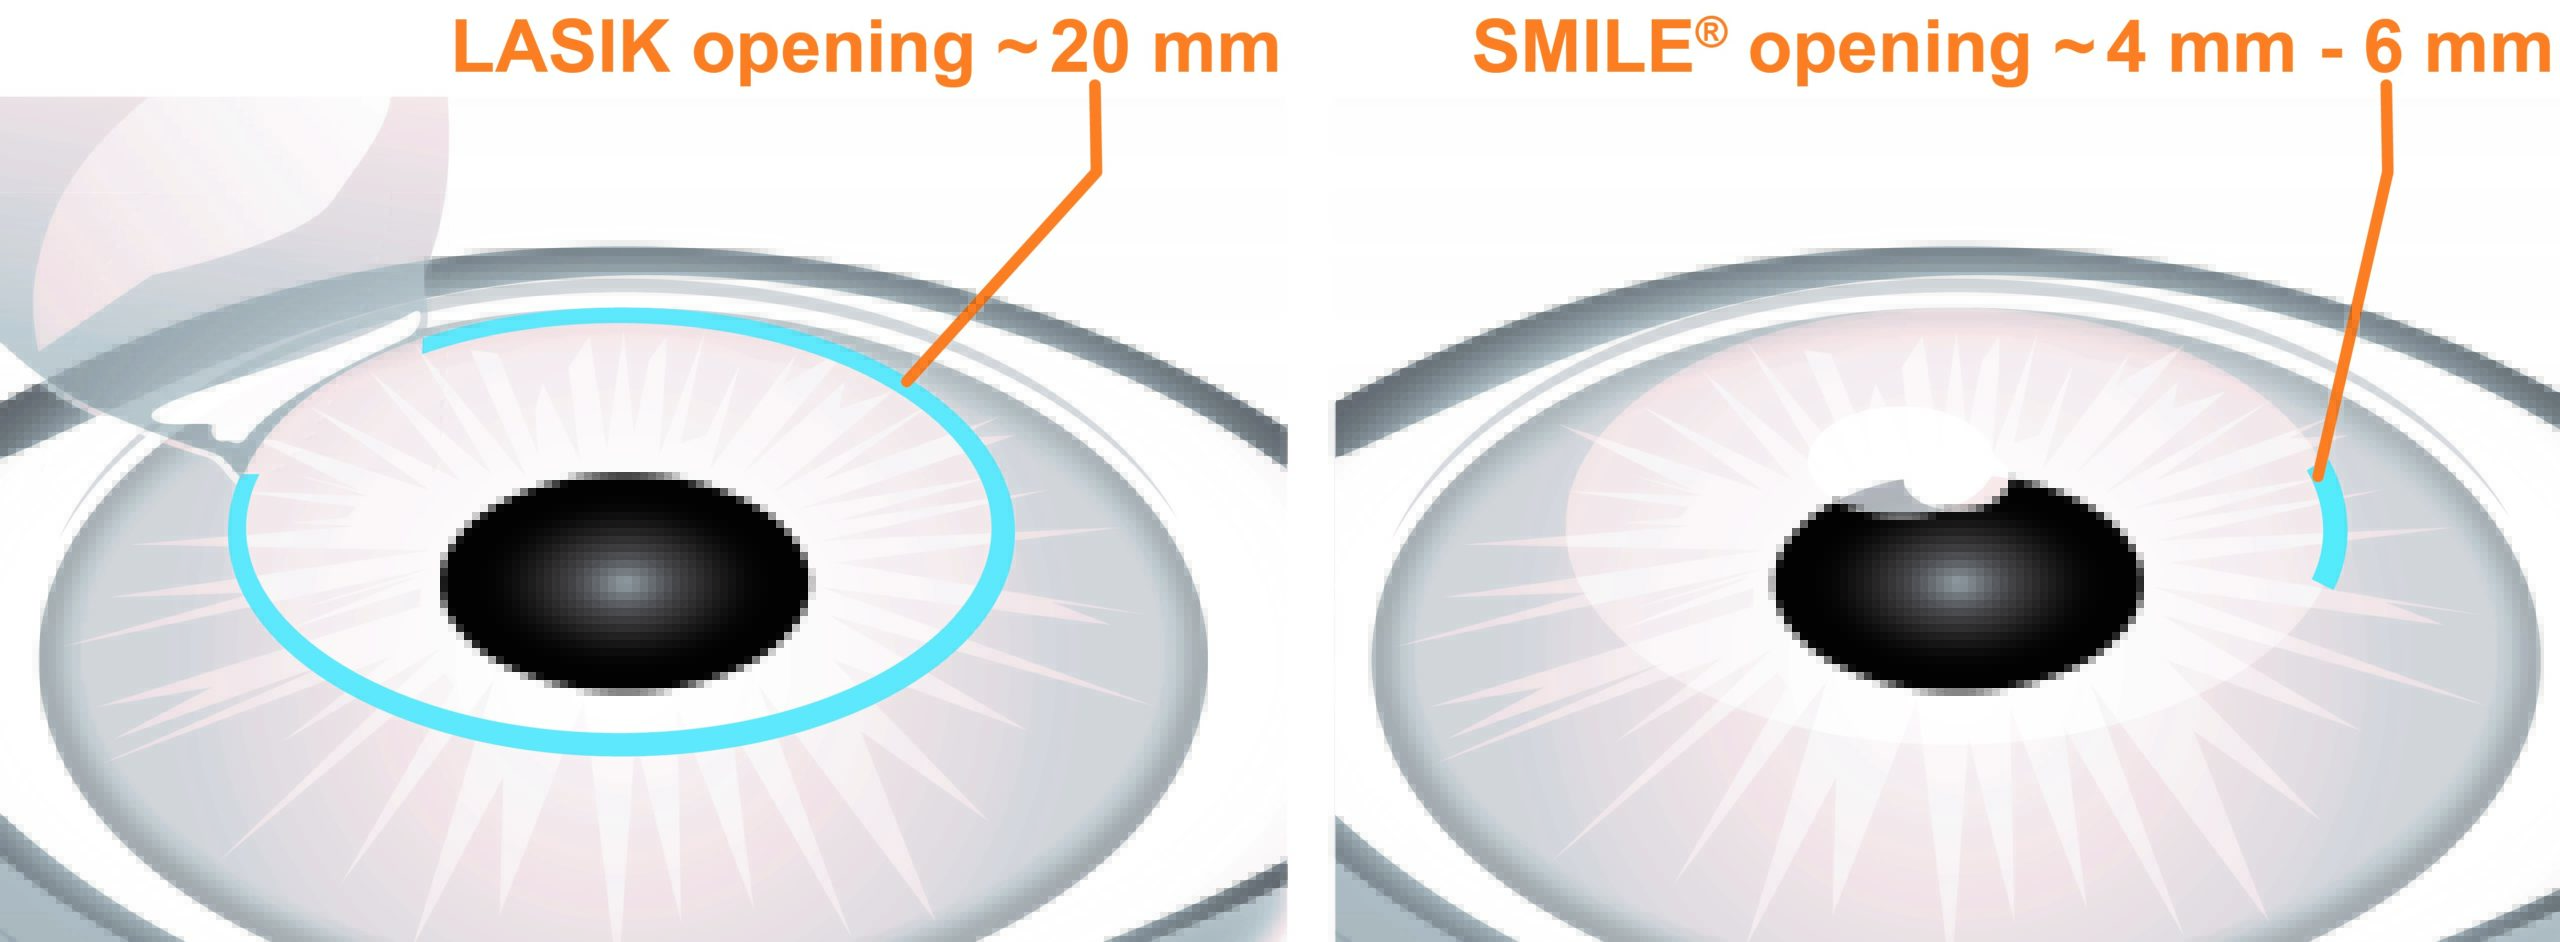 LASIK Eye Surgery in Dallas Texas // LaserCare Eye Center - 214-574-9600